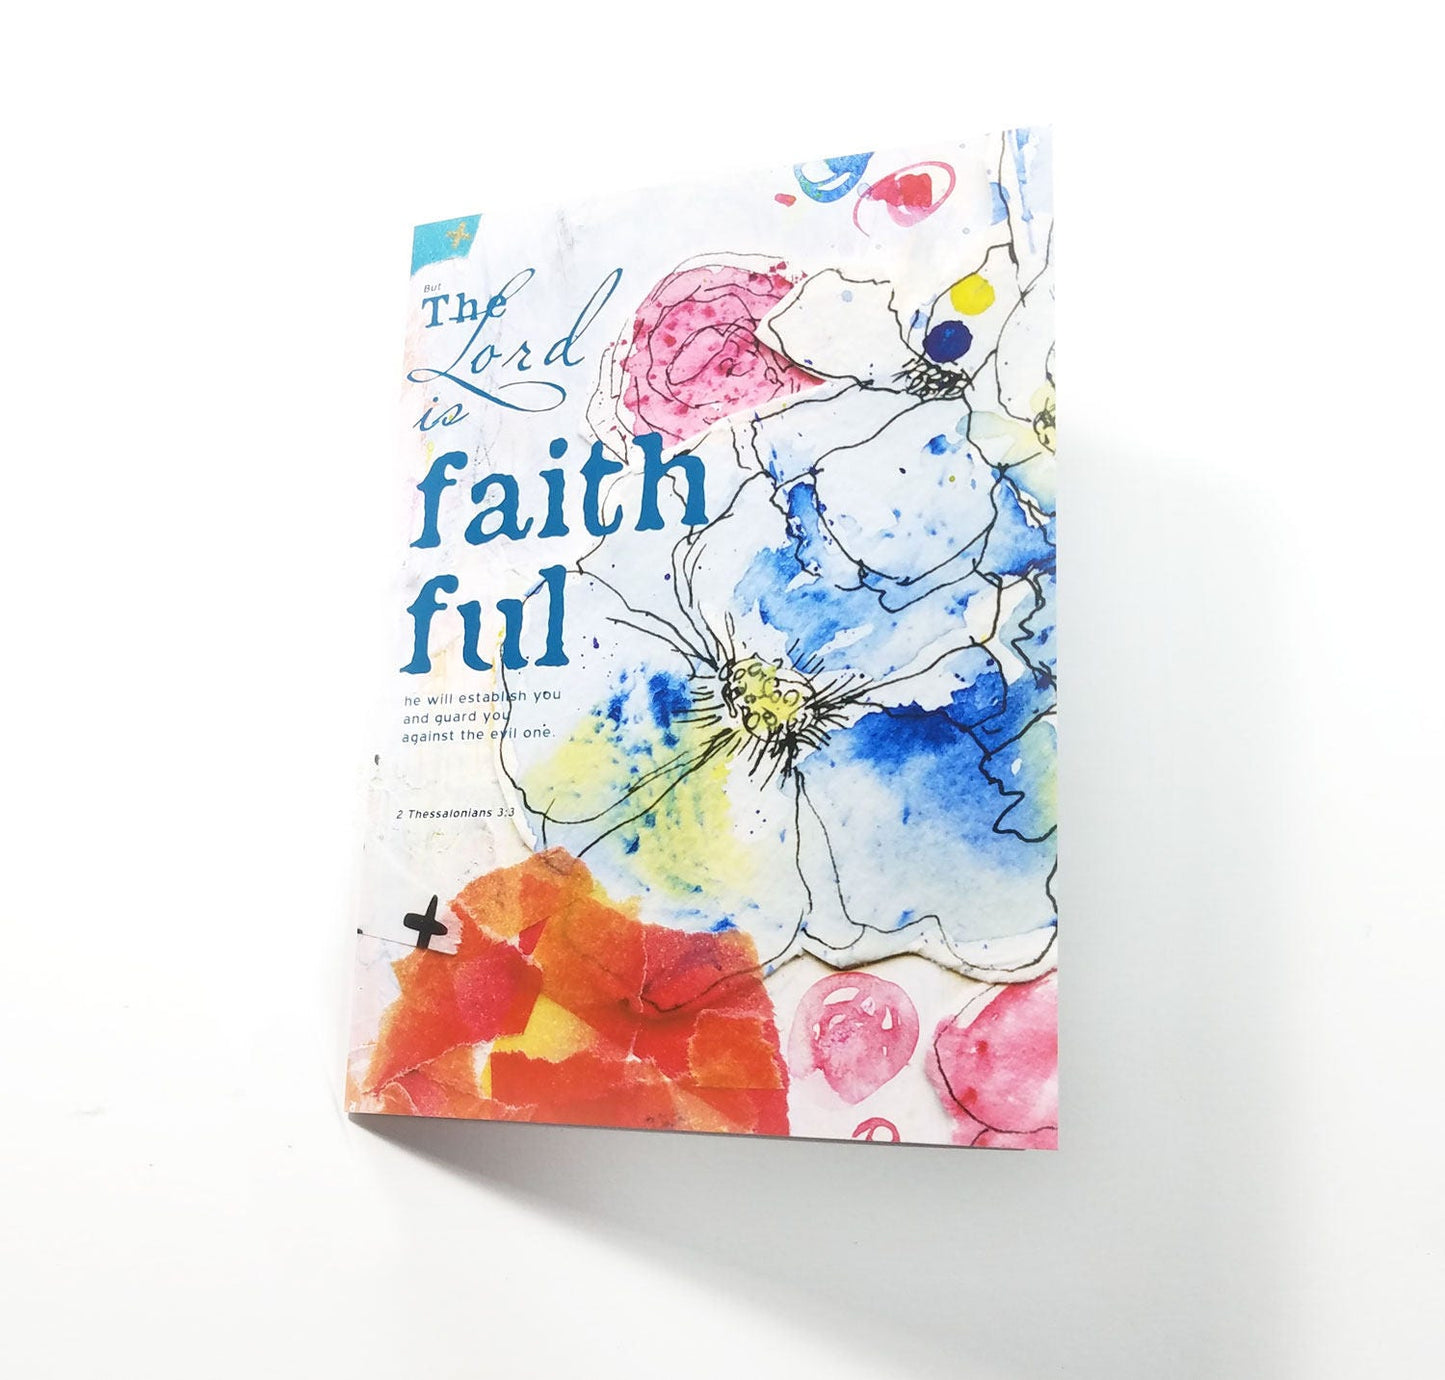 Set of 5 faith cards, greeting cards 5x7